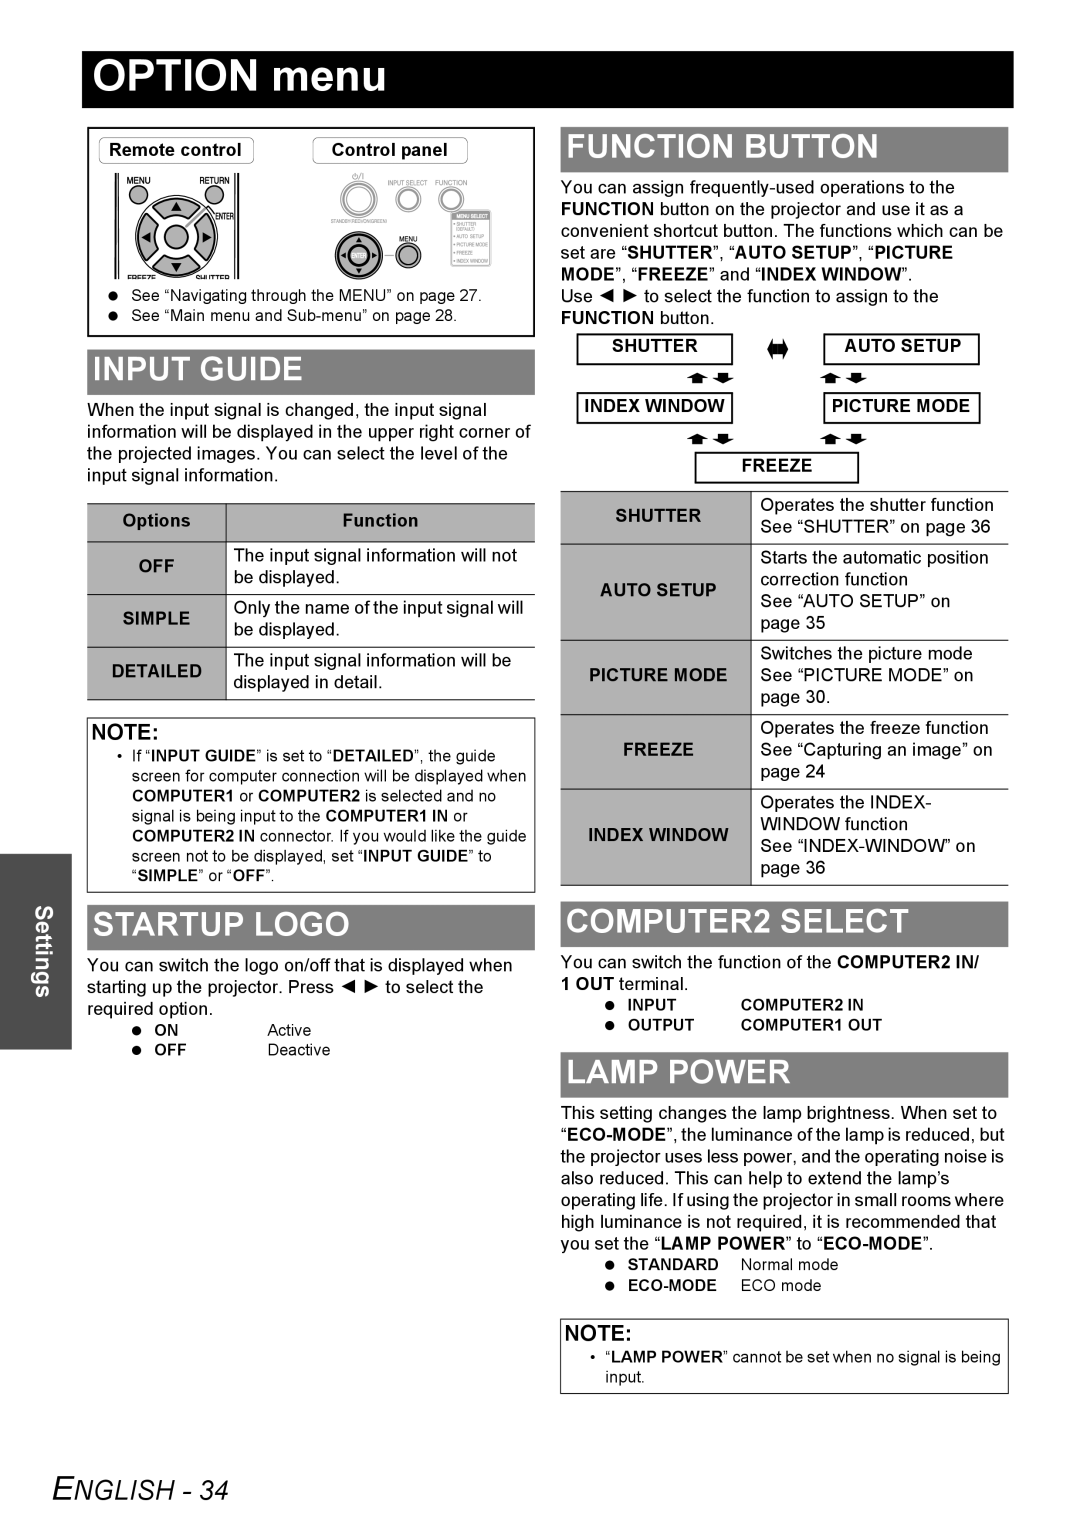 Philips PT-LB51SU OPTION menu, Input Guide, Function Button, Startup Logo, COMPUTER2 SELECT, Lamp Power, English, Settings 